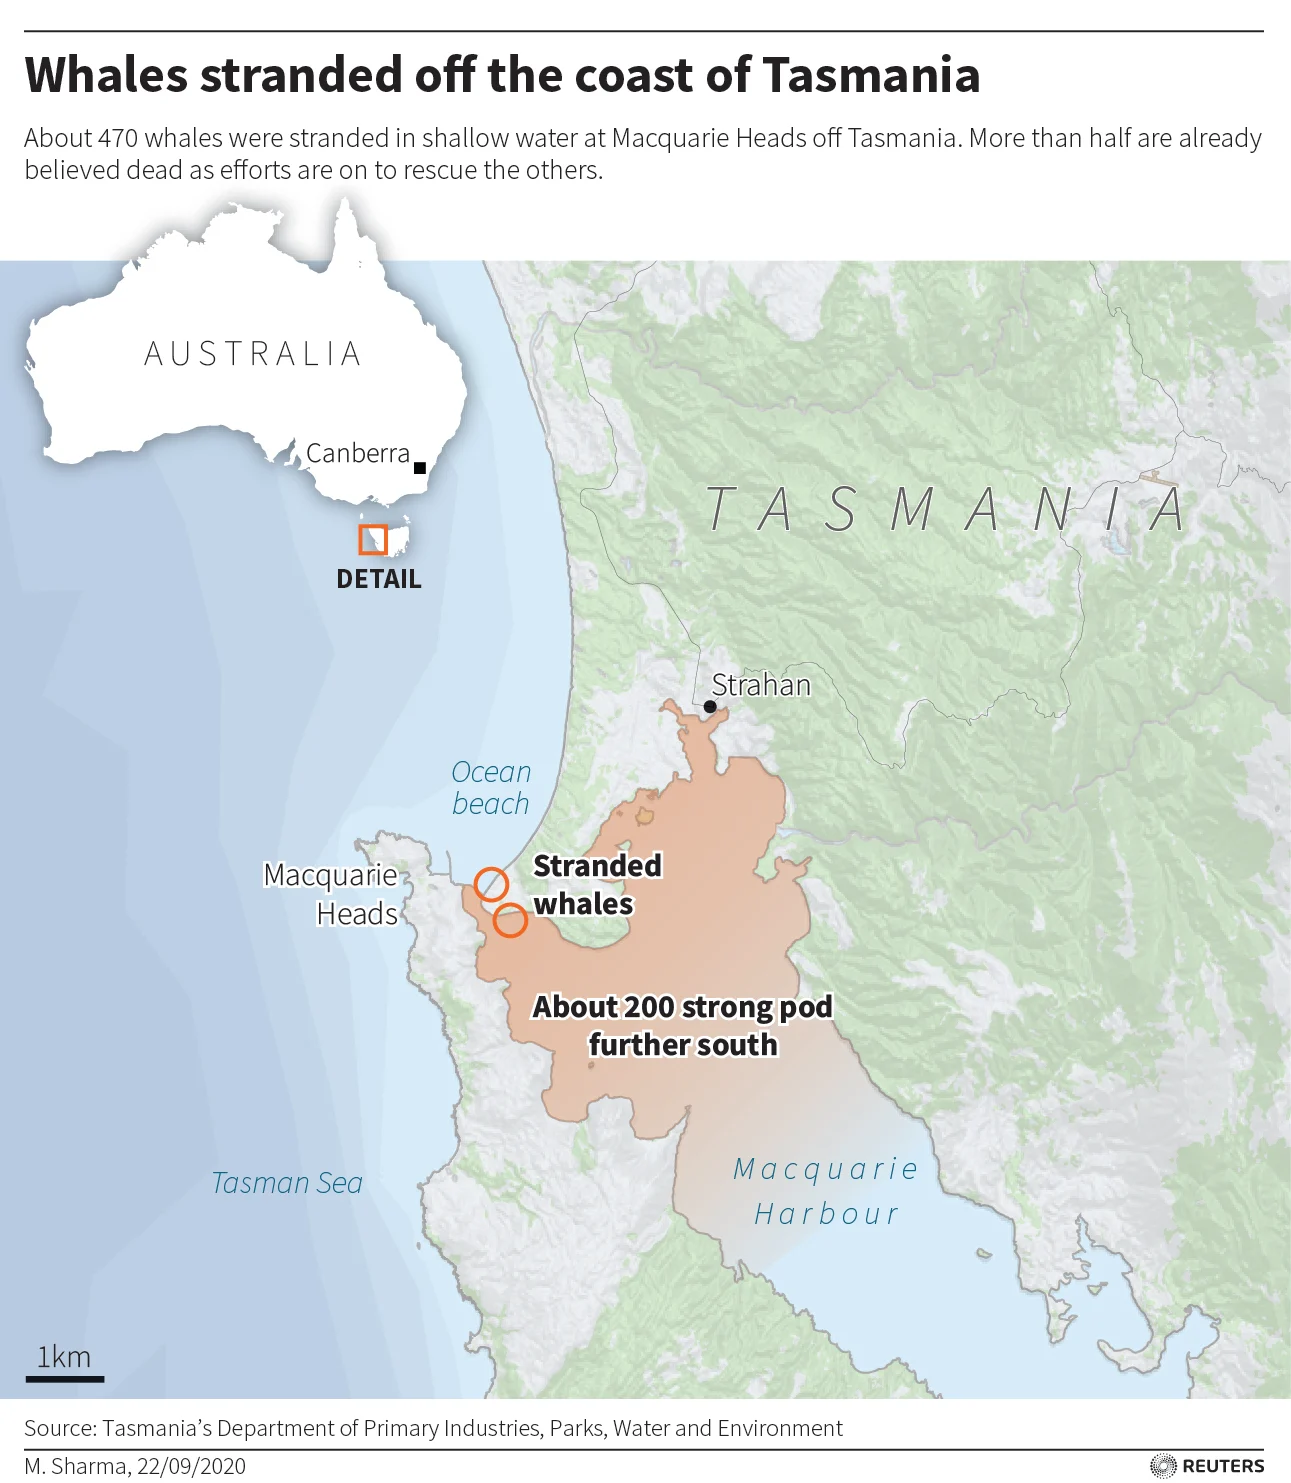 Graphic: Stranded whales location, Australia